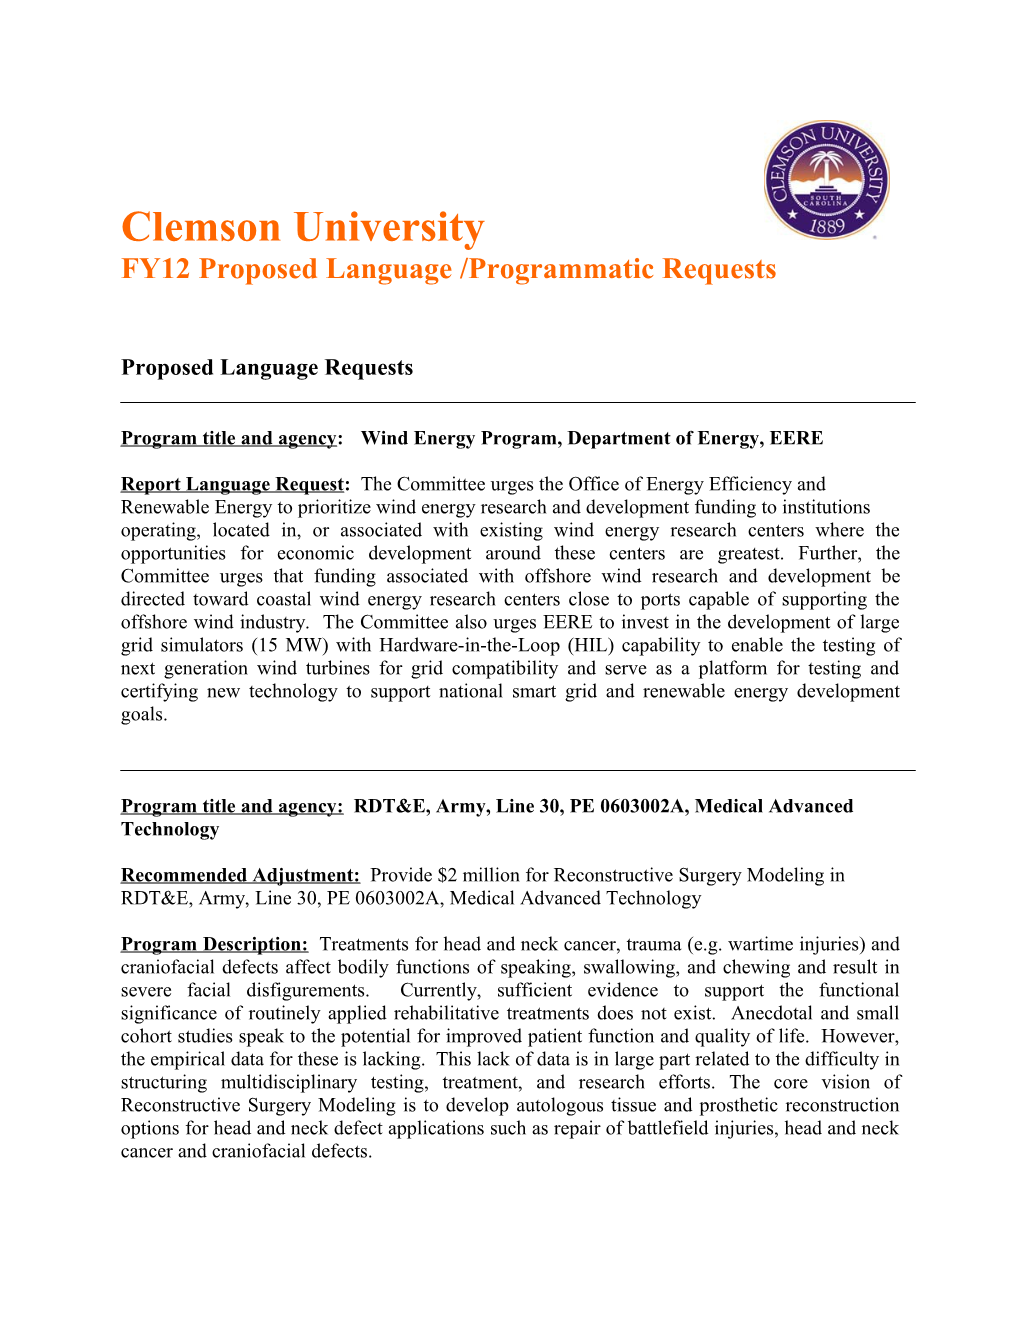 Clemson Fy2012 Program/Language Requests